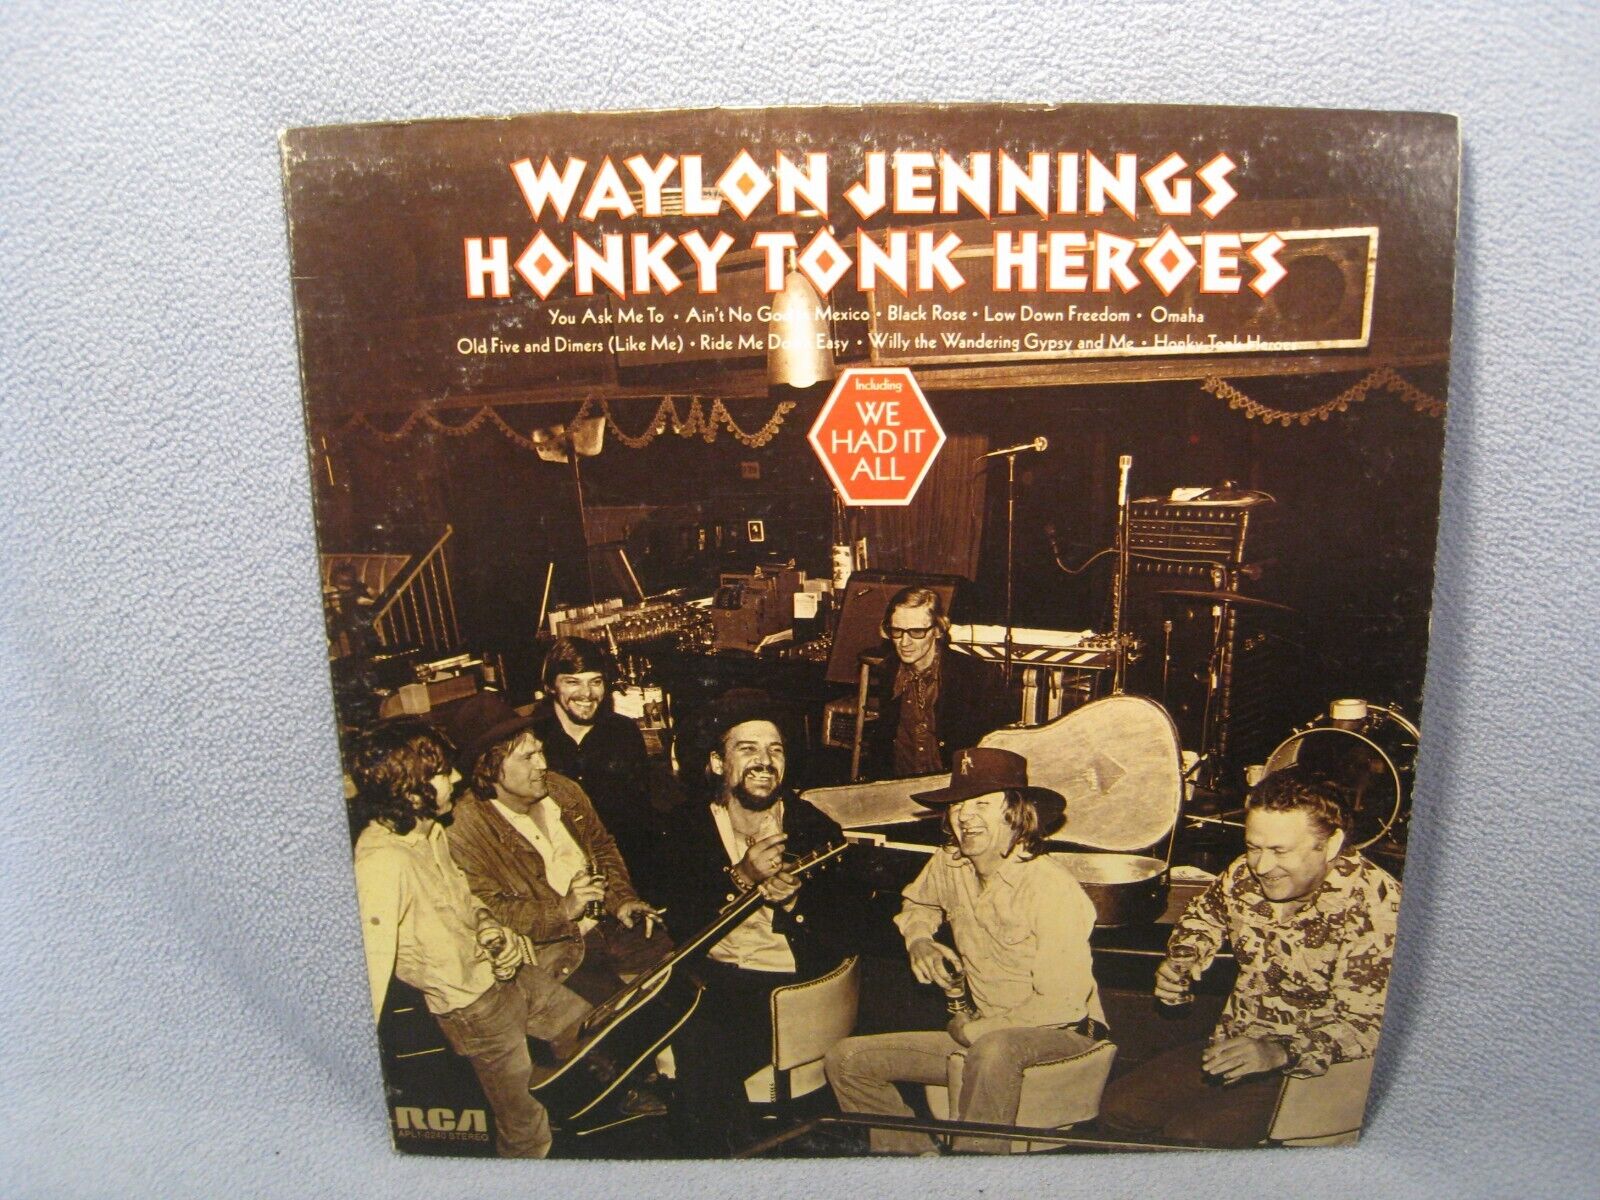 Vintage 1973 RCA. Waylon Jennings Hokey Tonk Heros LP. Record